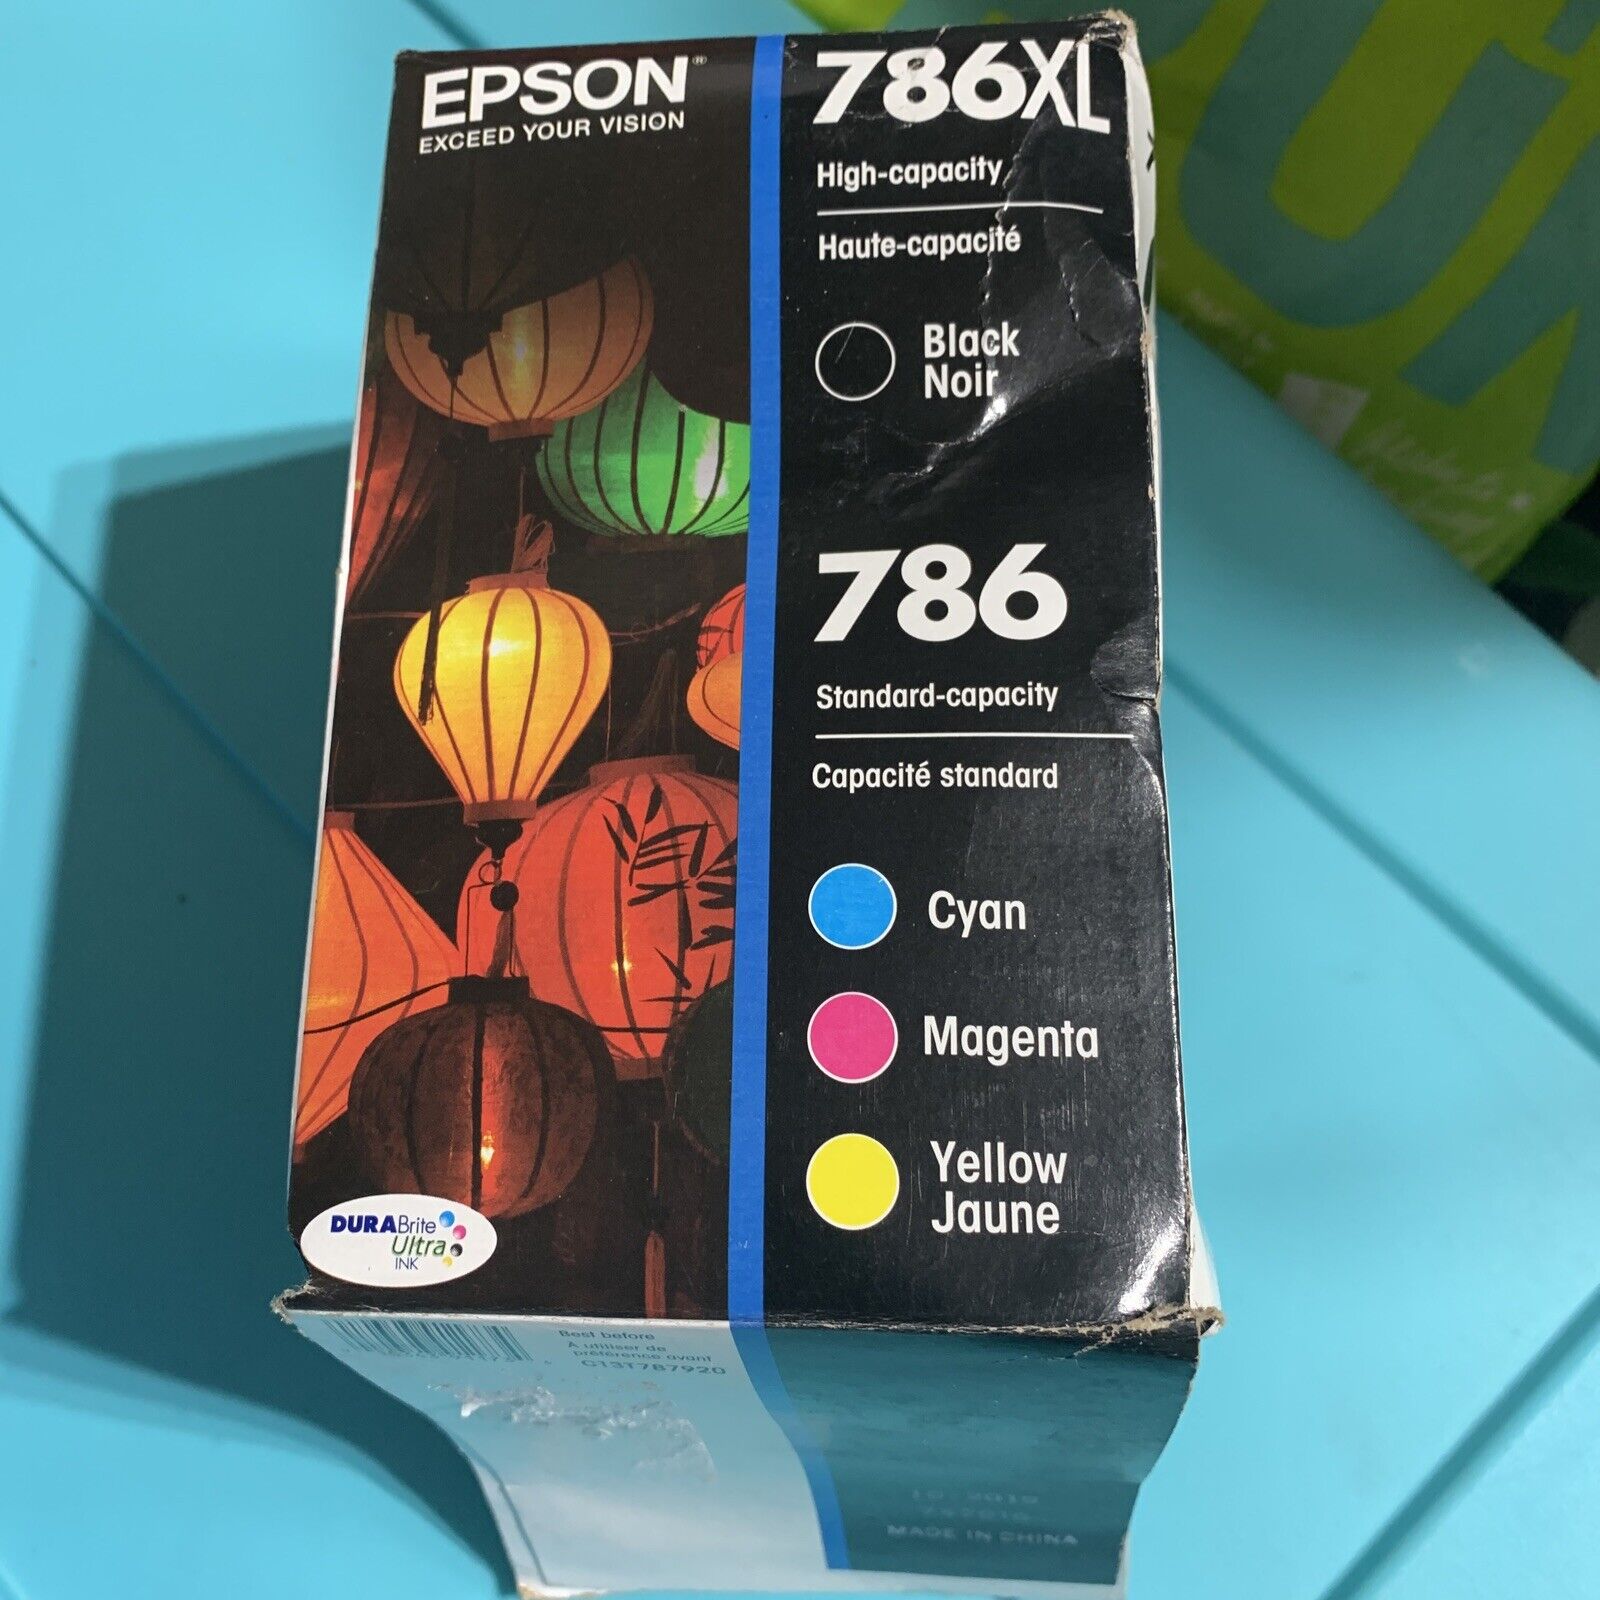 Epson Durabrite 786xl Black & 786 Standard Color Ink Cartridges Date 10-2019